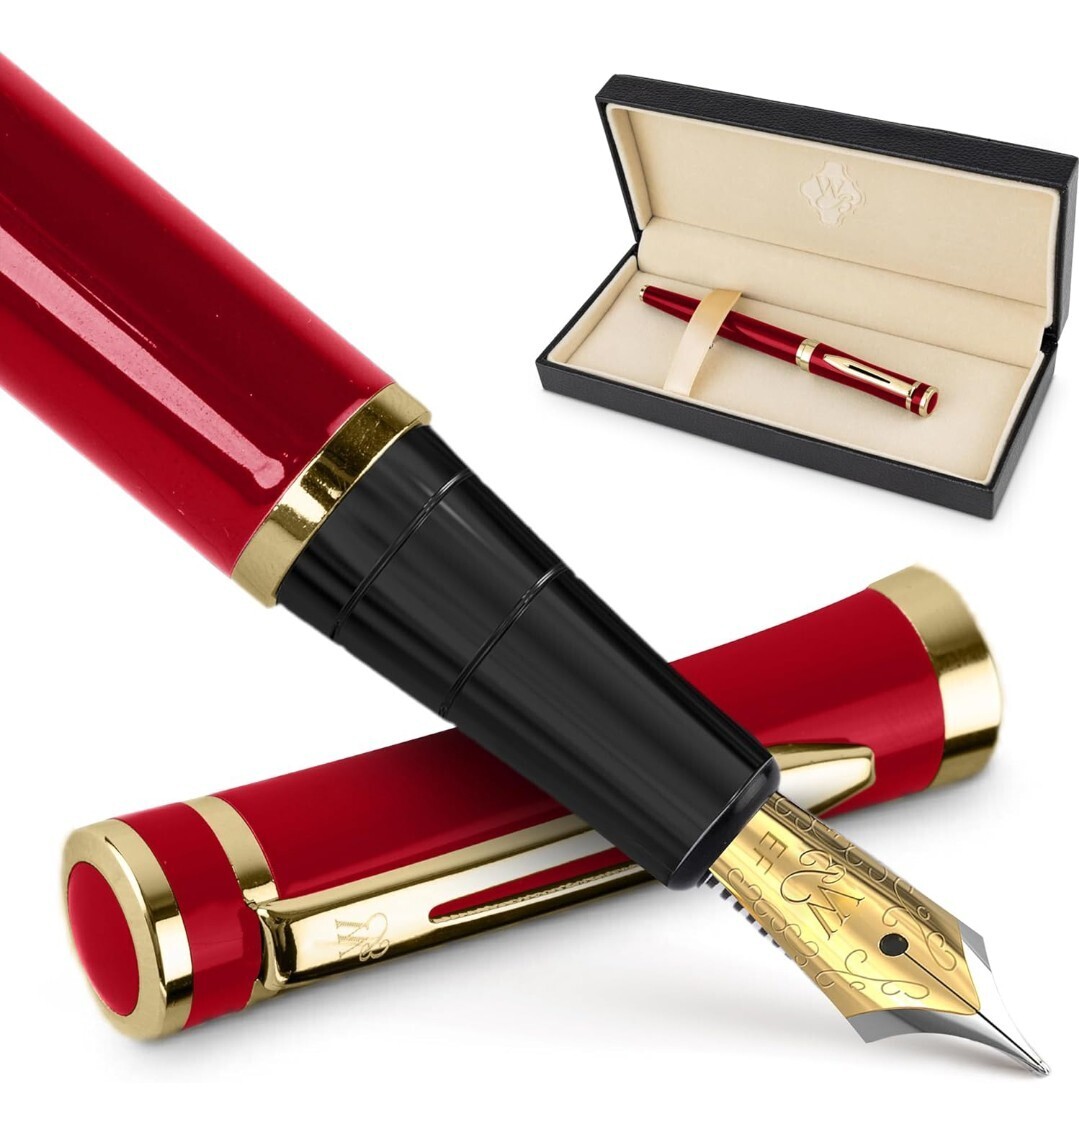 Wordsworth & Black Fountain Pen Set, 18K Glided Extra Fine Nib, Includes 24 Pack Ink Cartridges, Ink Refill Converter & Gift Box, _画像1